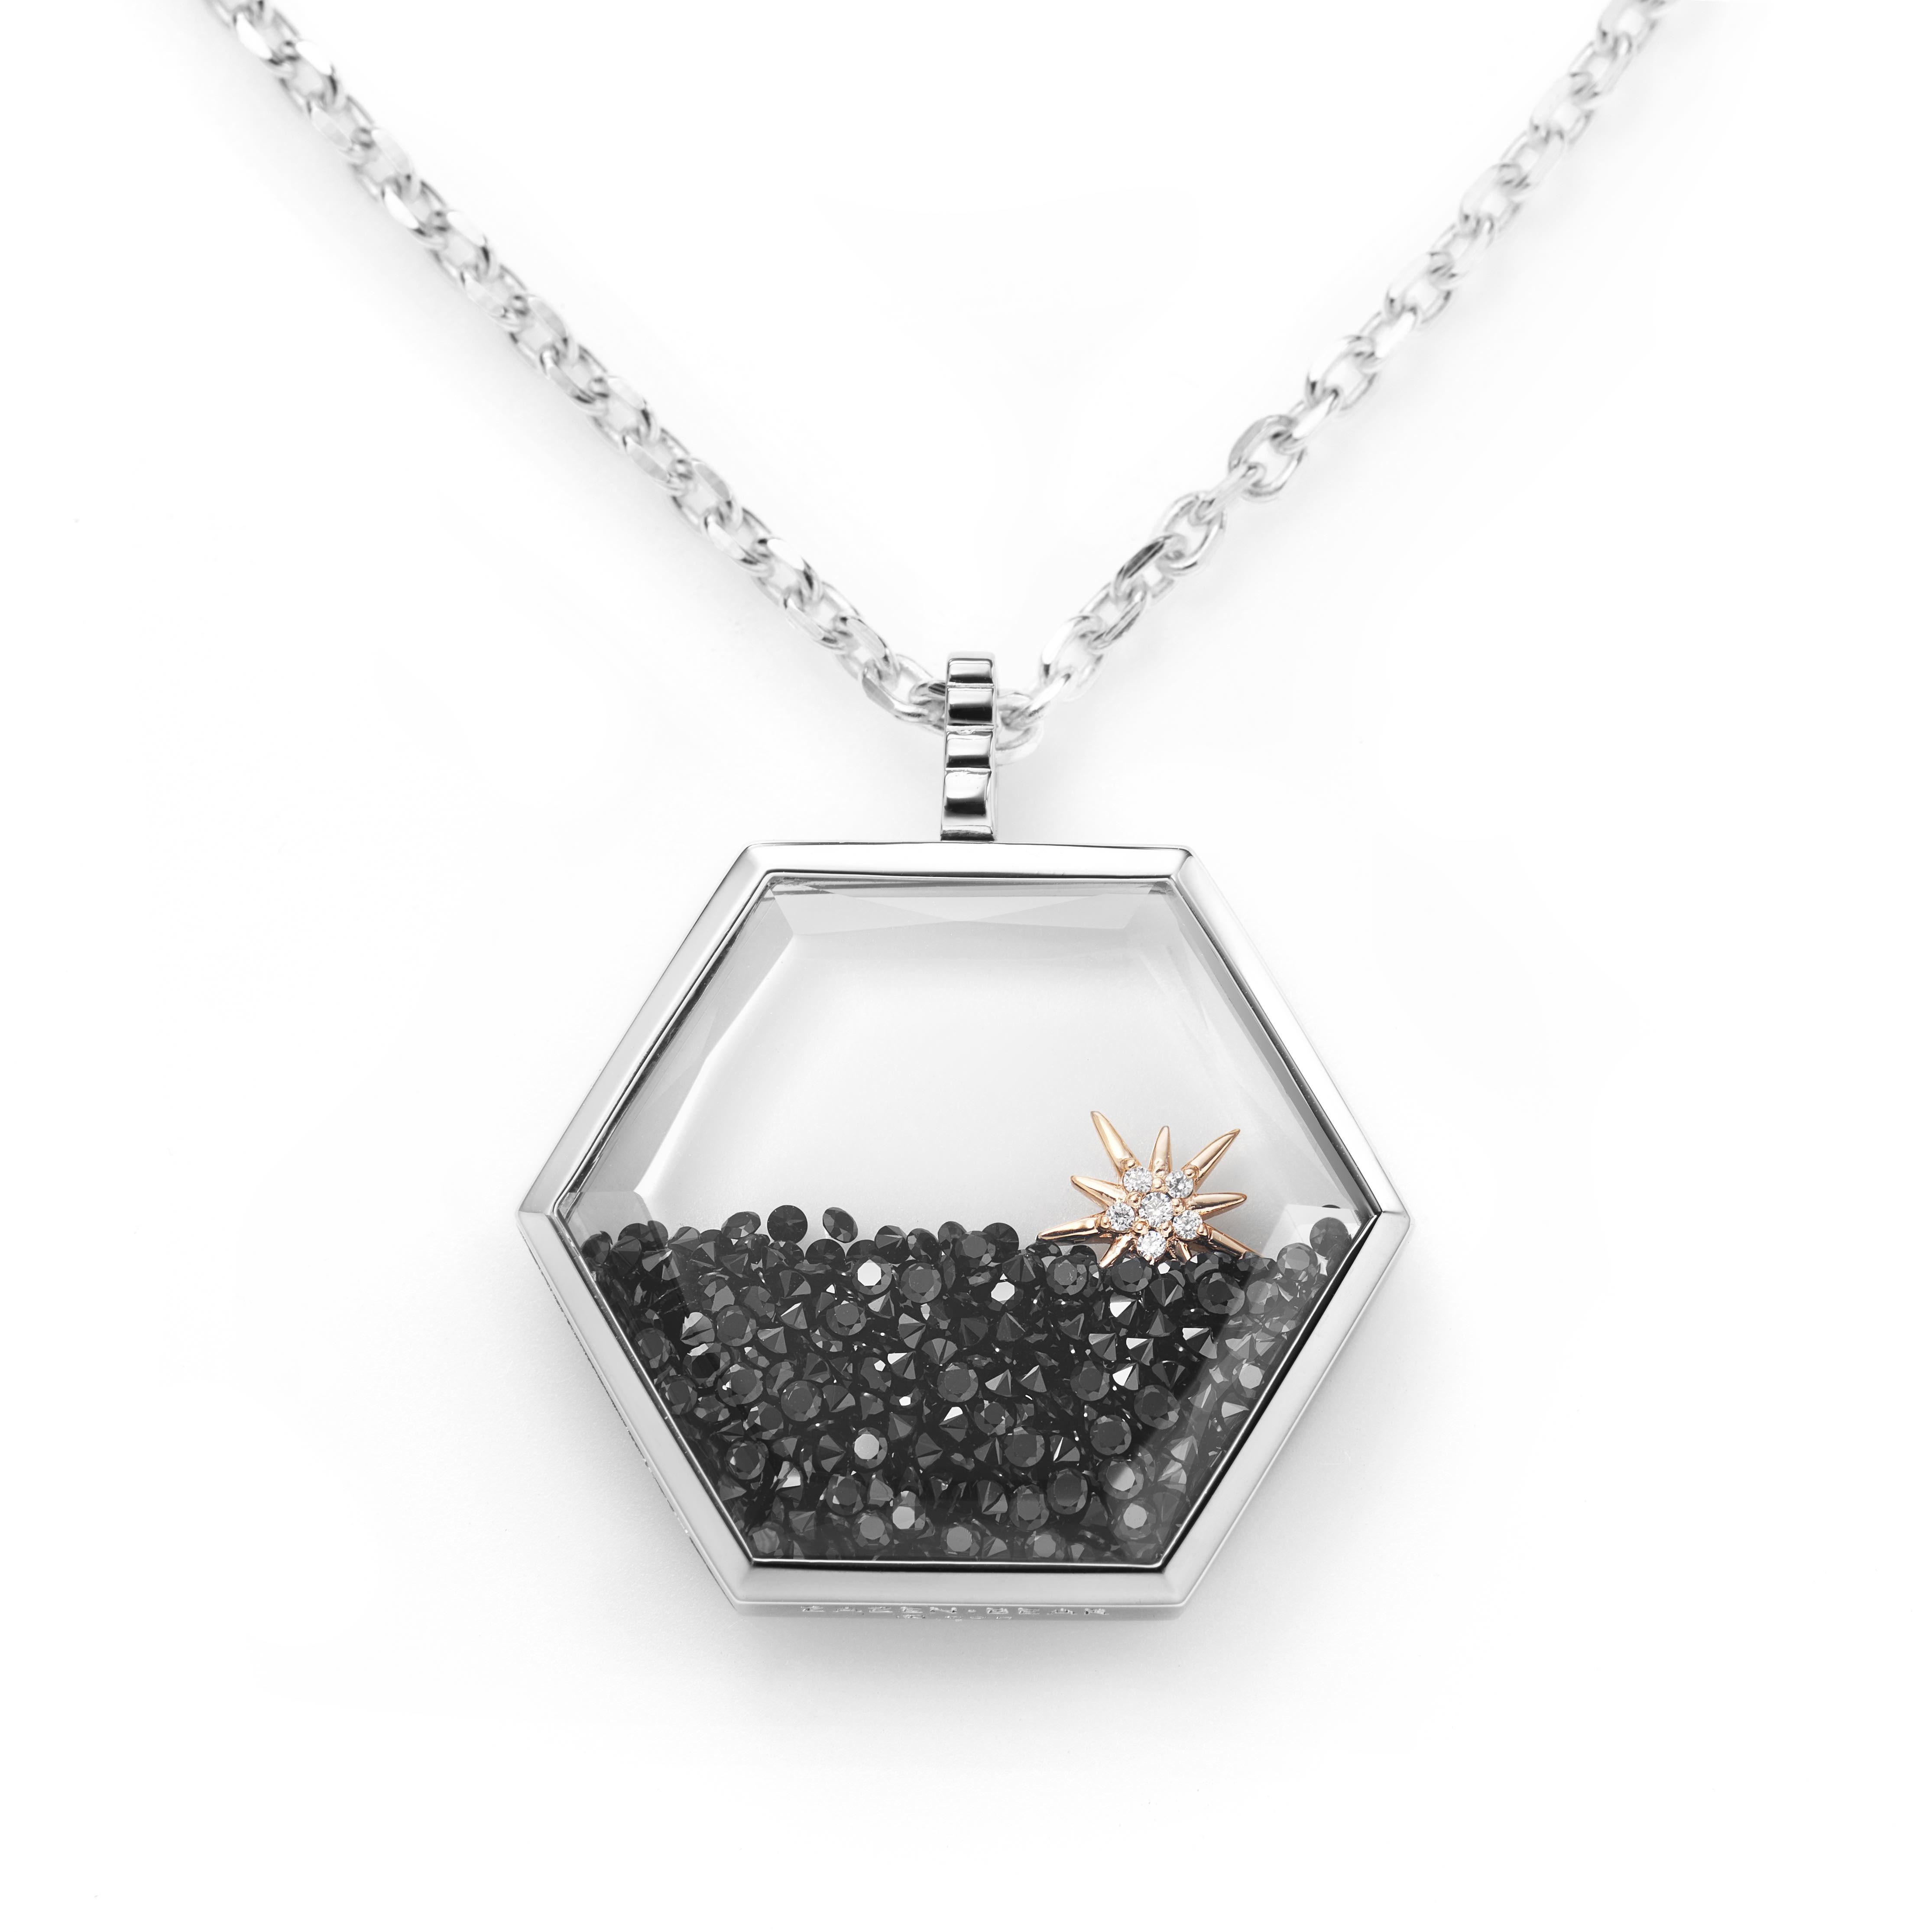 Zazen Bear "Stardust" pendant with cut crystals